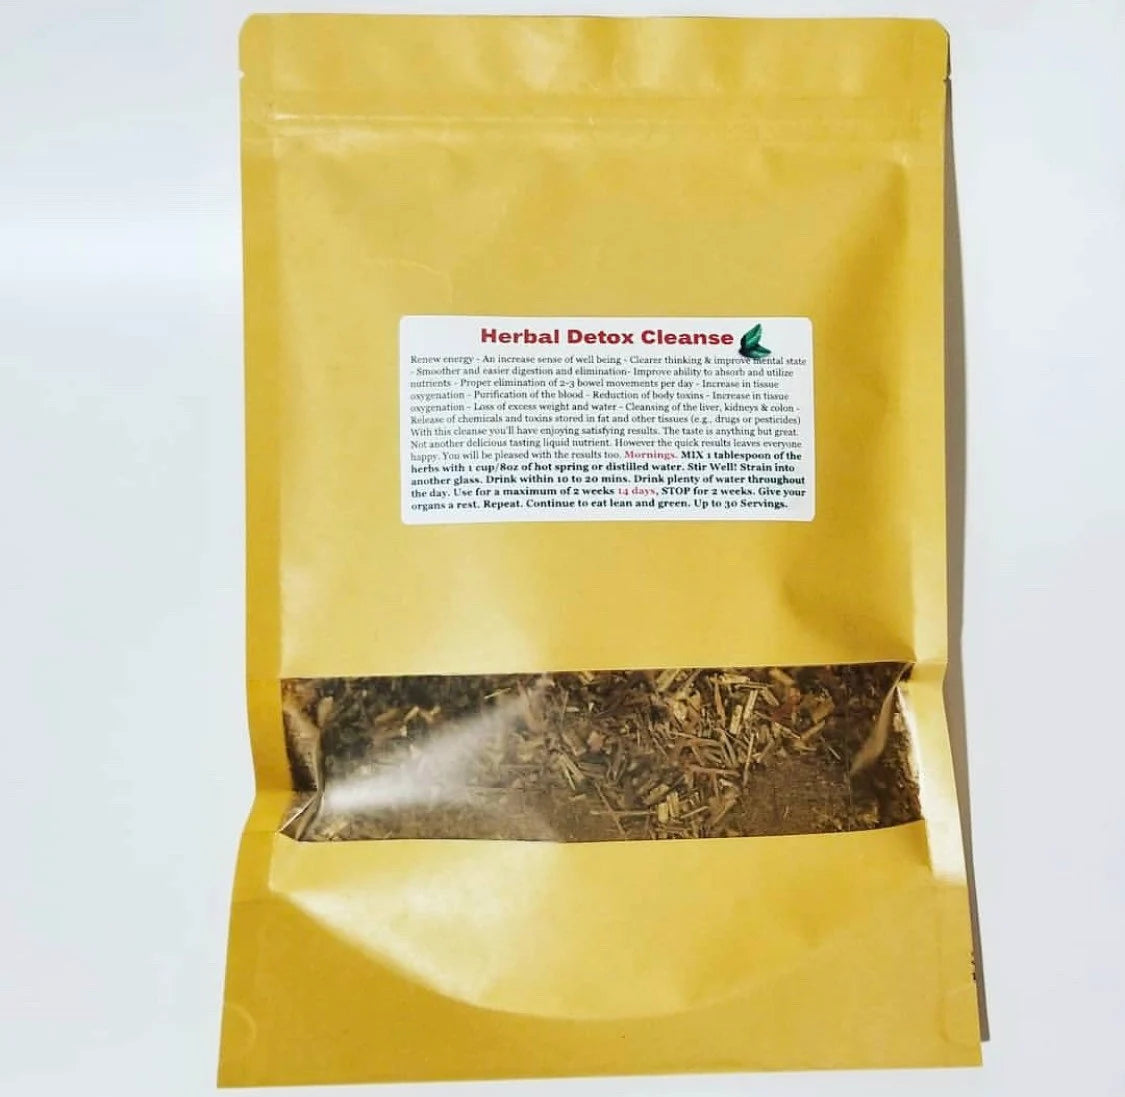 14 days Full Body Organic Herbal Detox Cleanse (Herbs powder) (Dr. Sebi inspired)